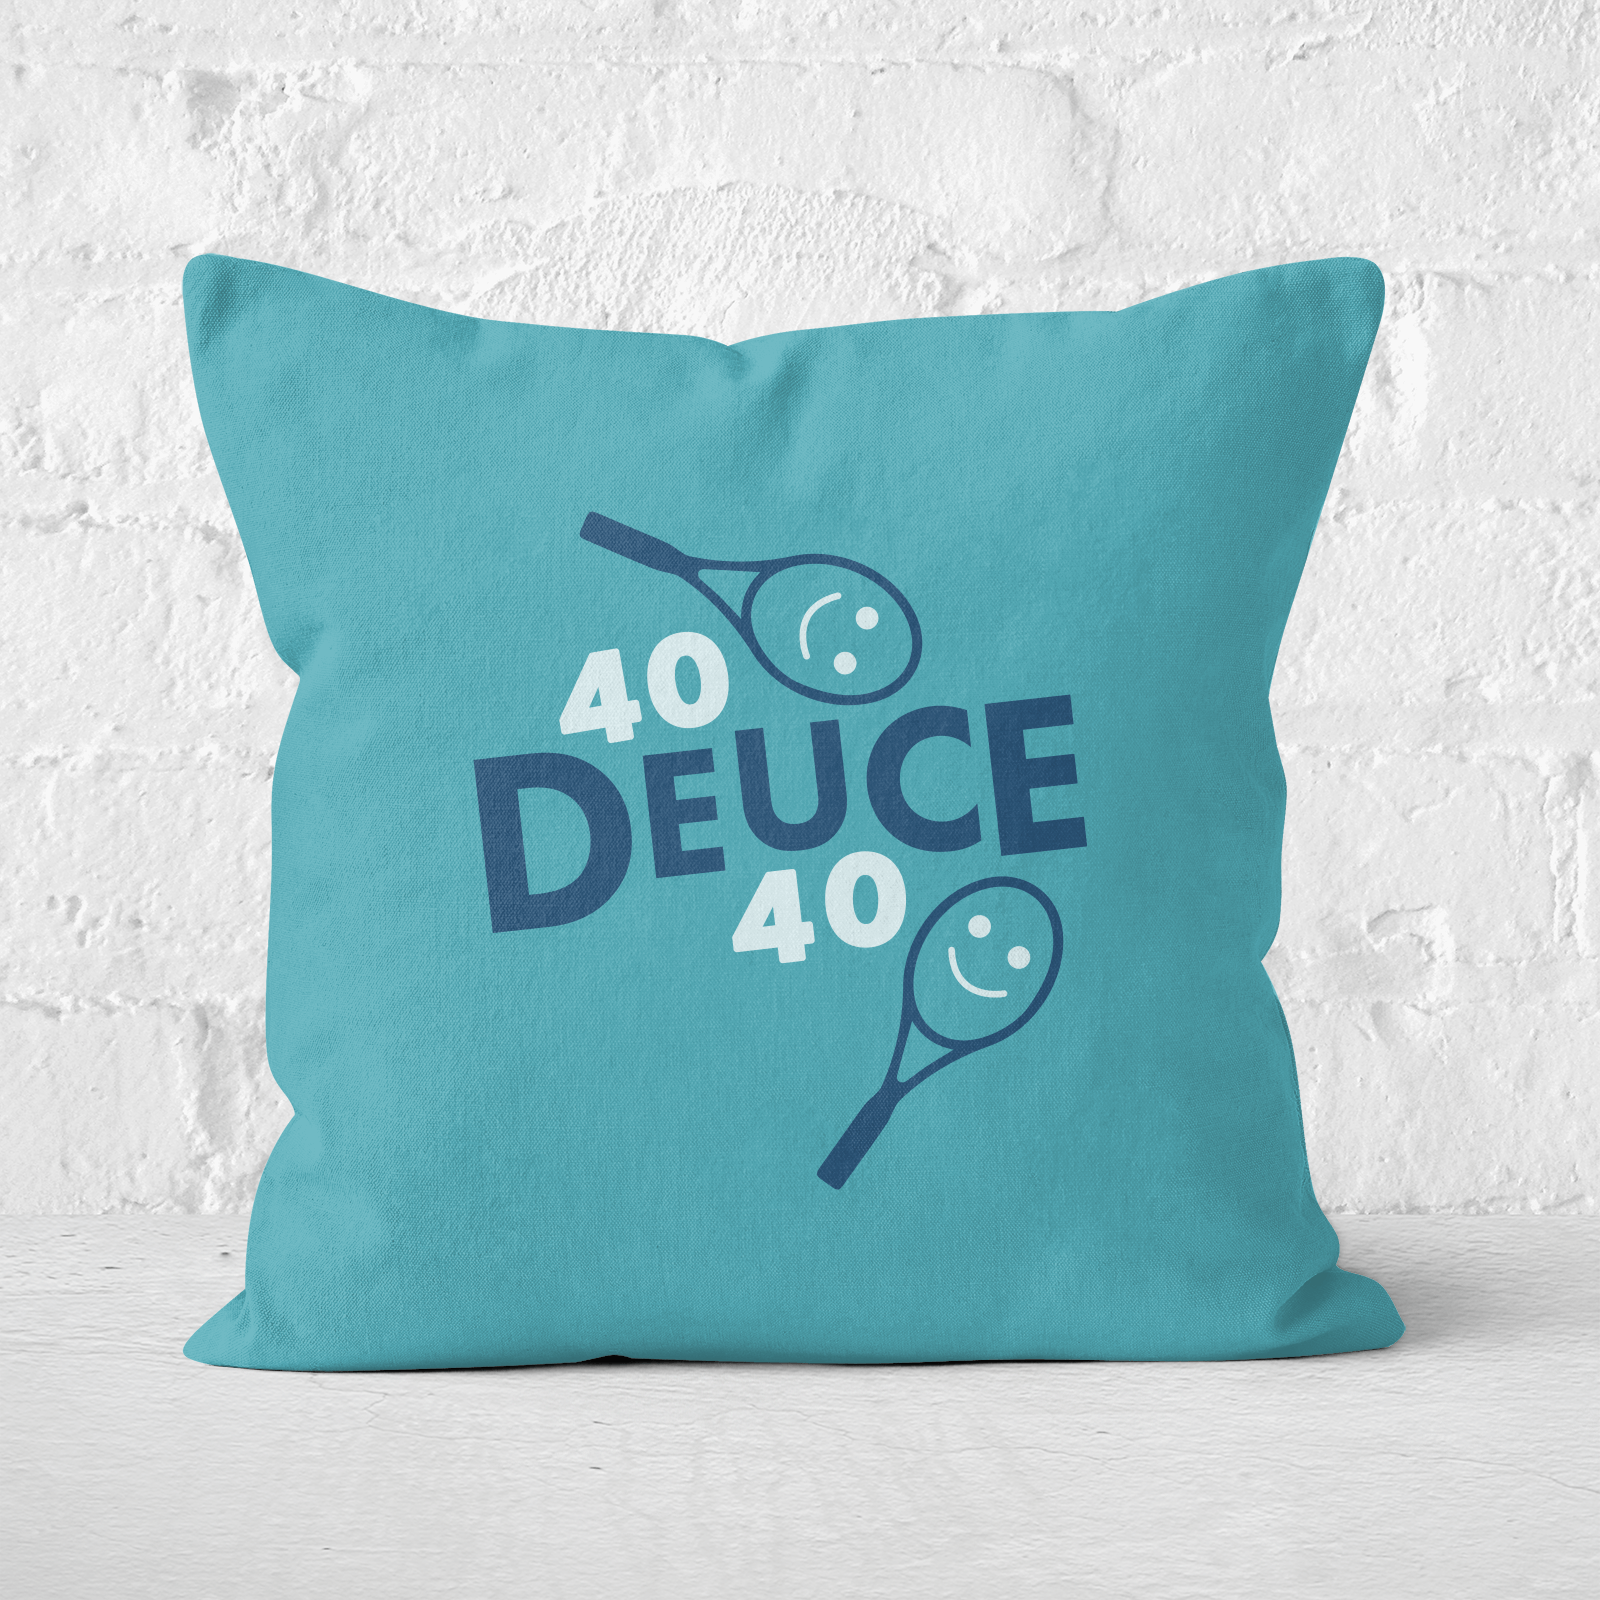 40 Deuce 40 Square Cushion   50x50cm   Soft Touch